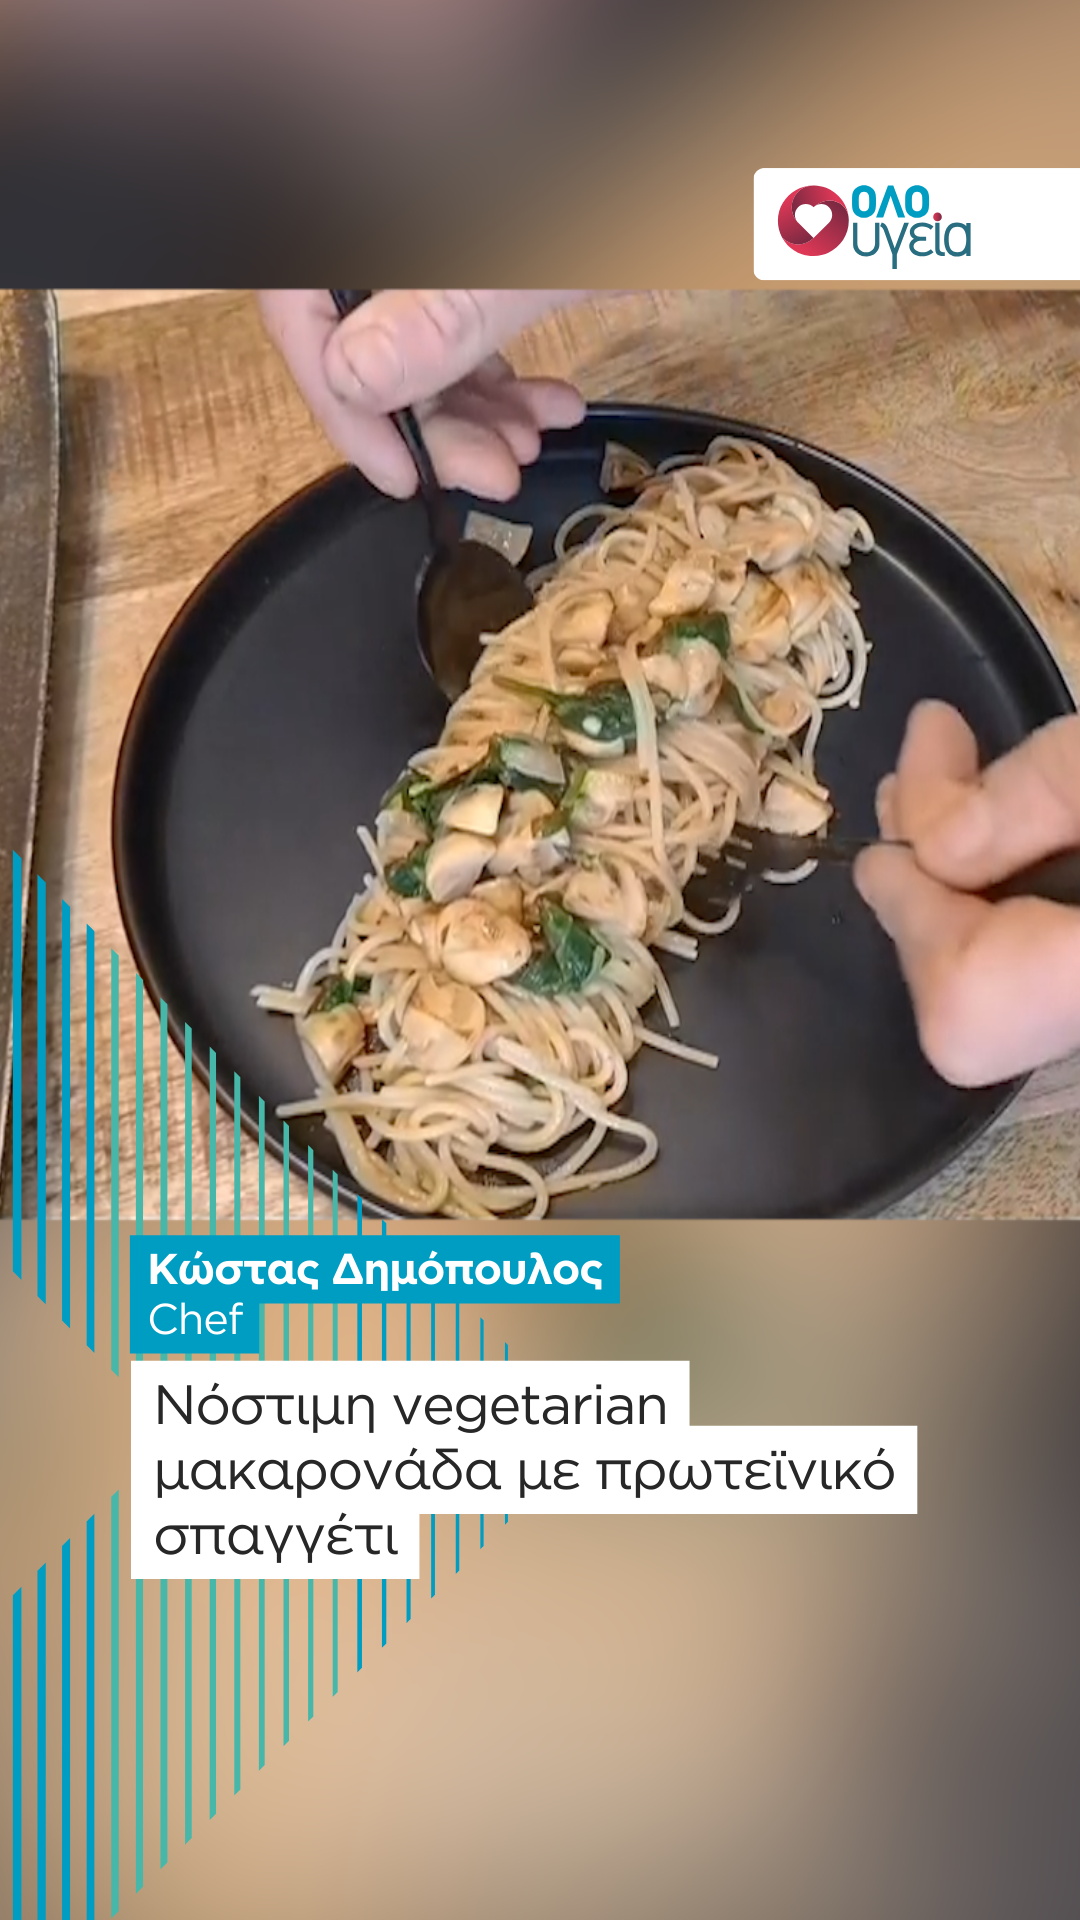 Vegetarian μακαρονάδα με πρωτεϊνικό σπαγγέτι